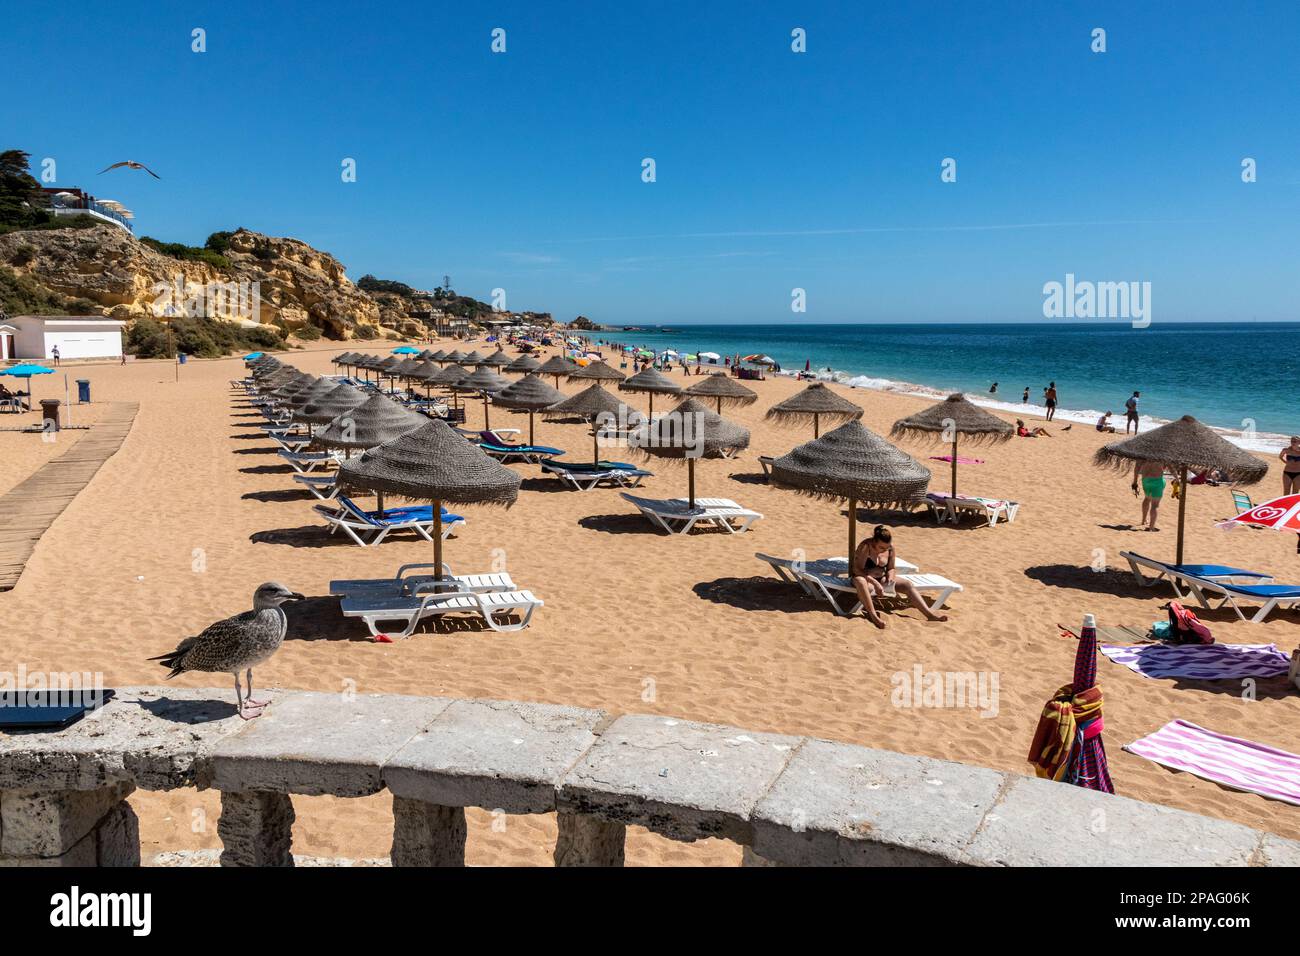 Praia de Albufeira, Algarve, Portugal Stock Photo